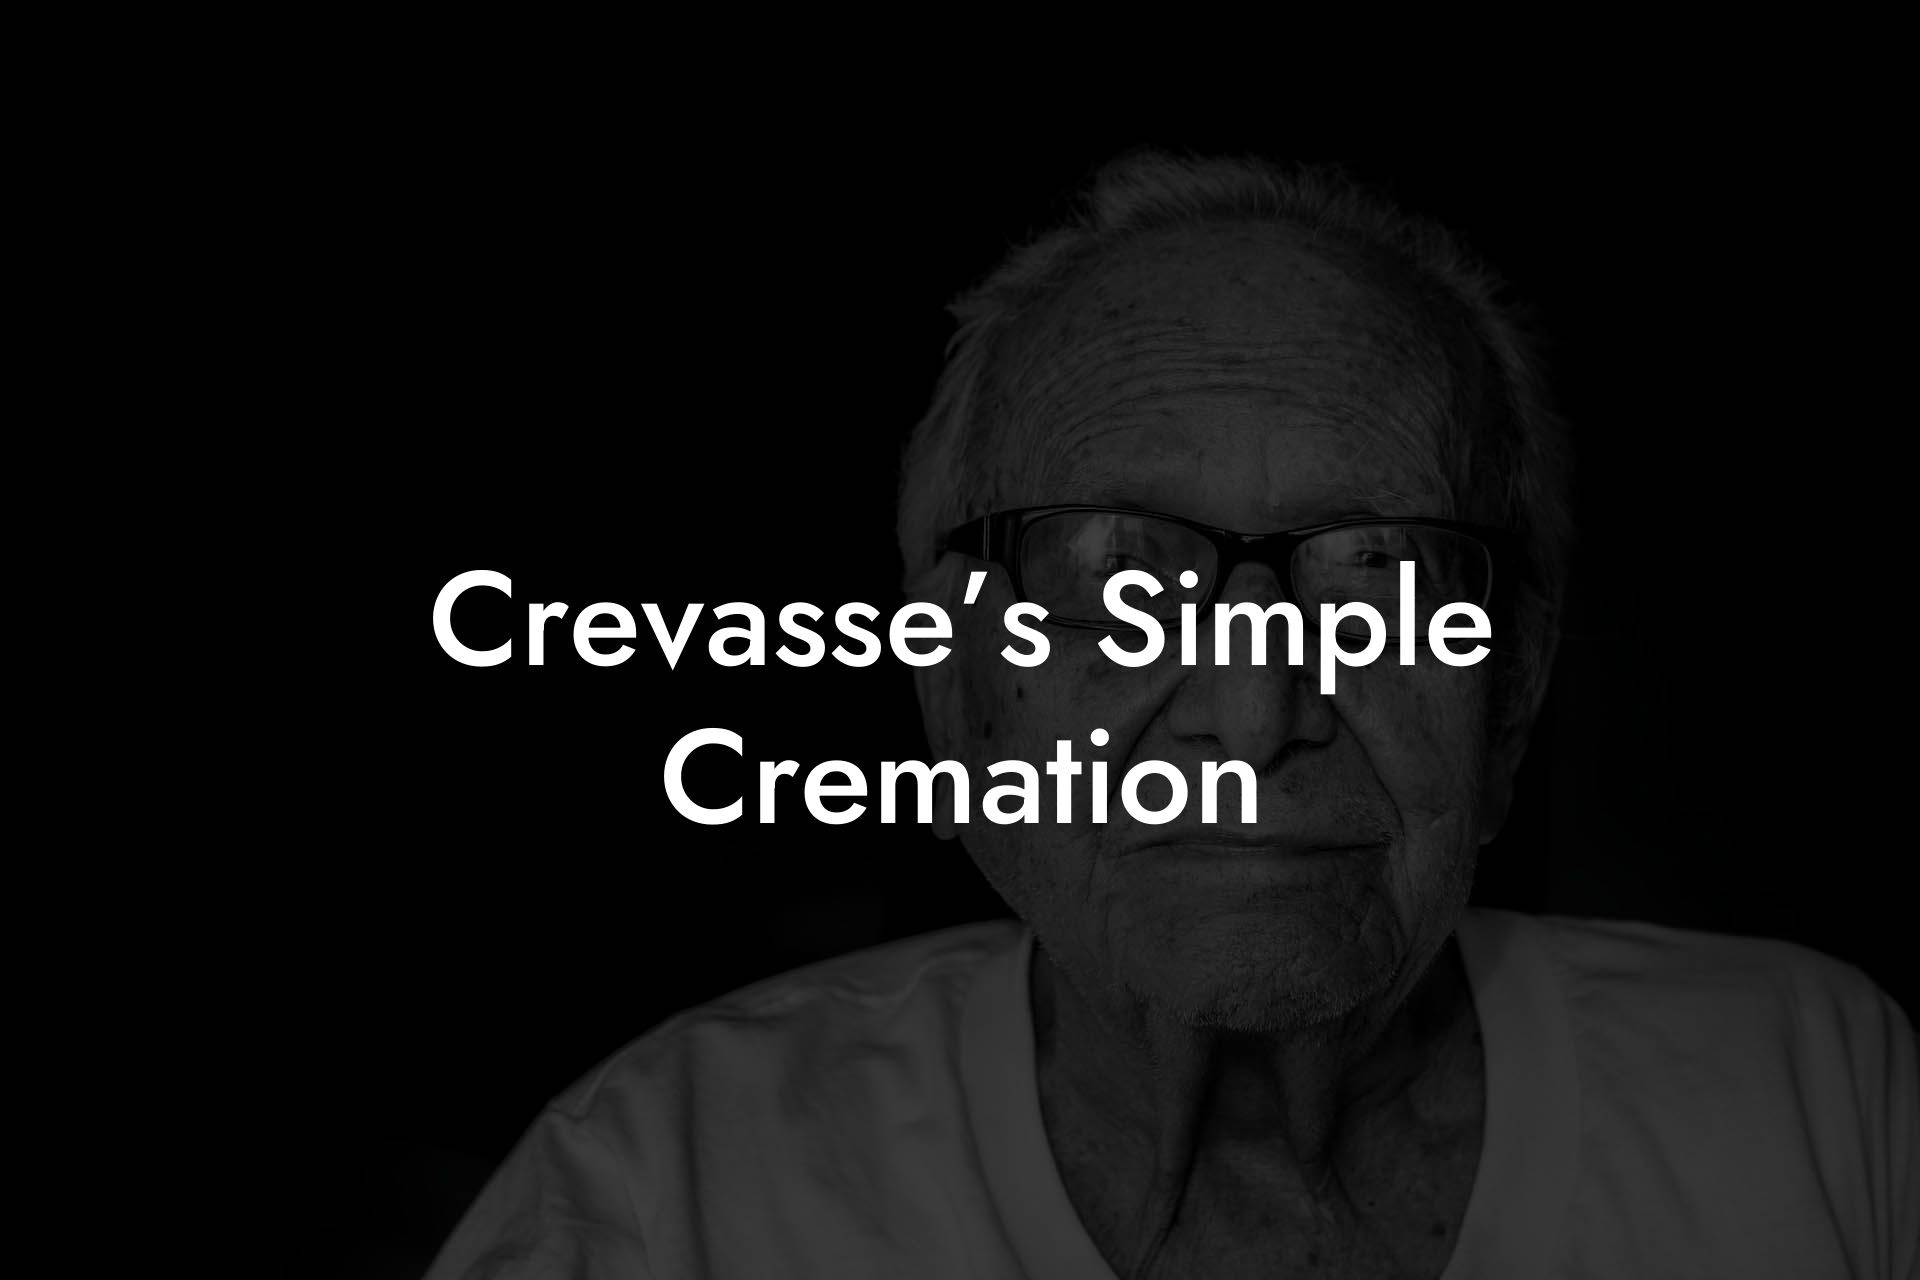 Crevasse’s Simple Cremation